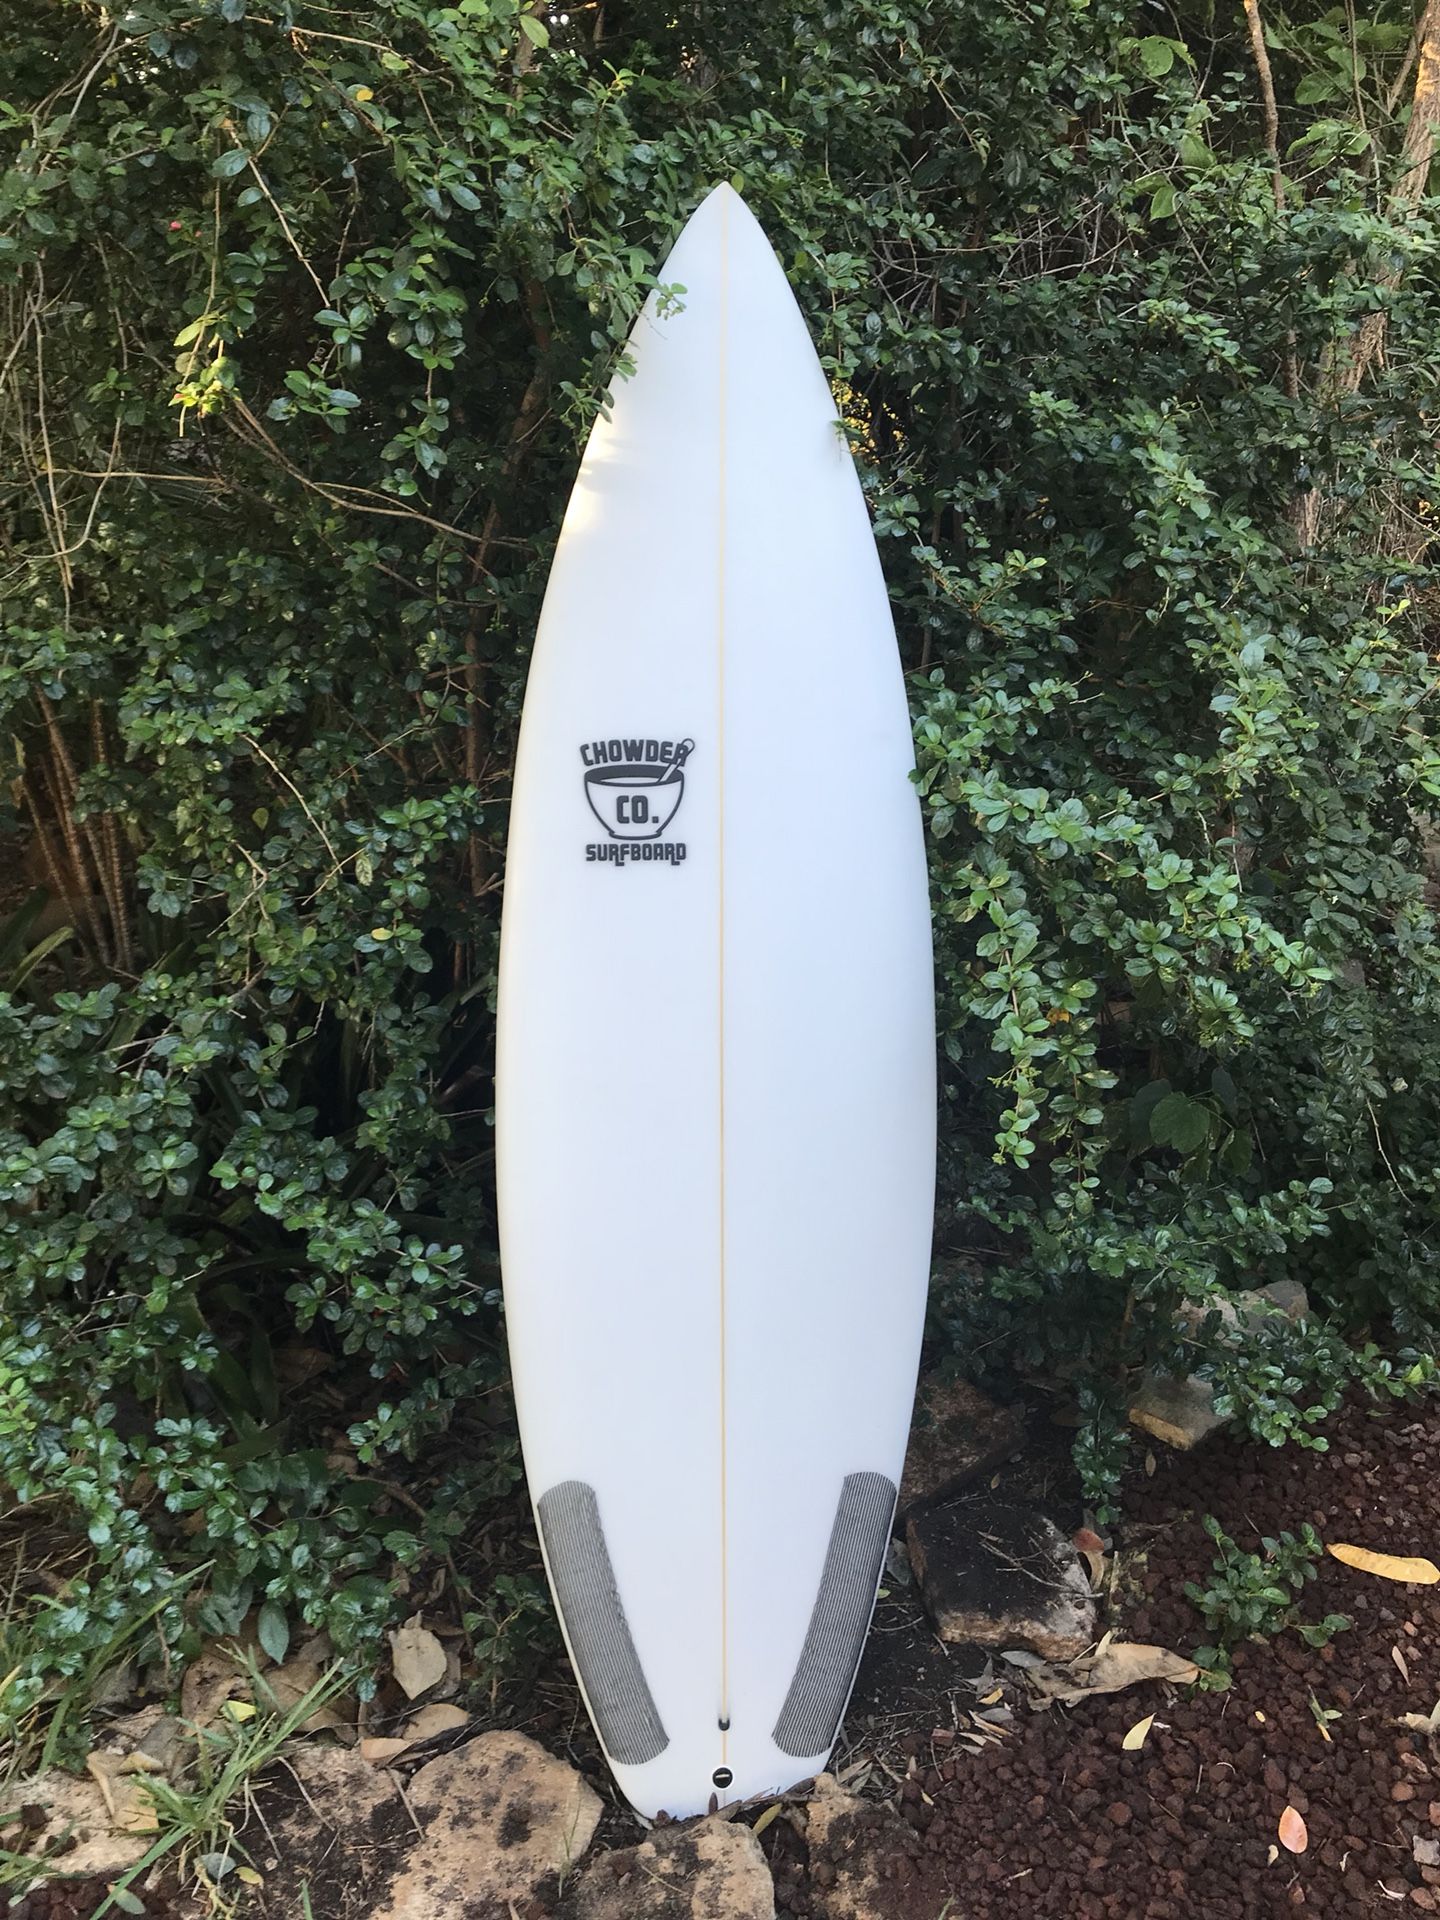 Brand New Shortboard Surfboard